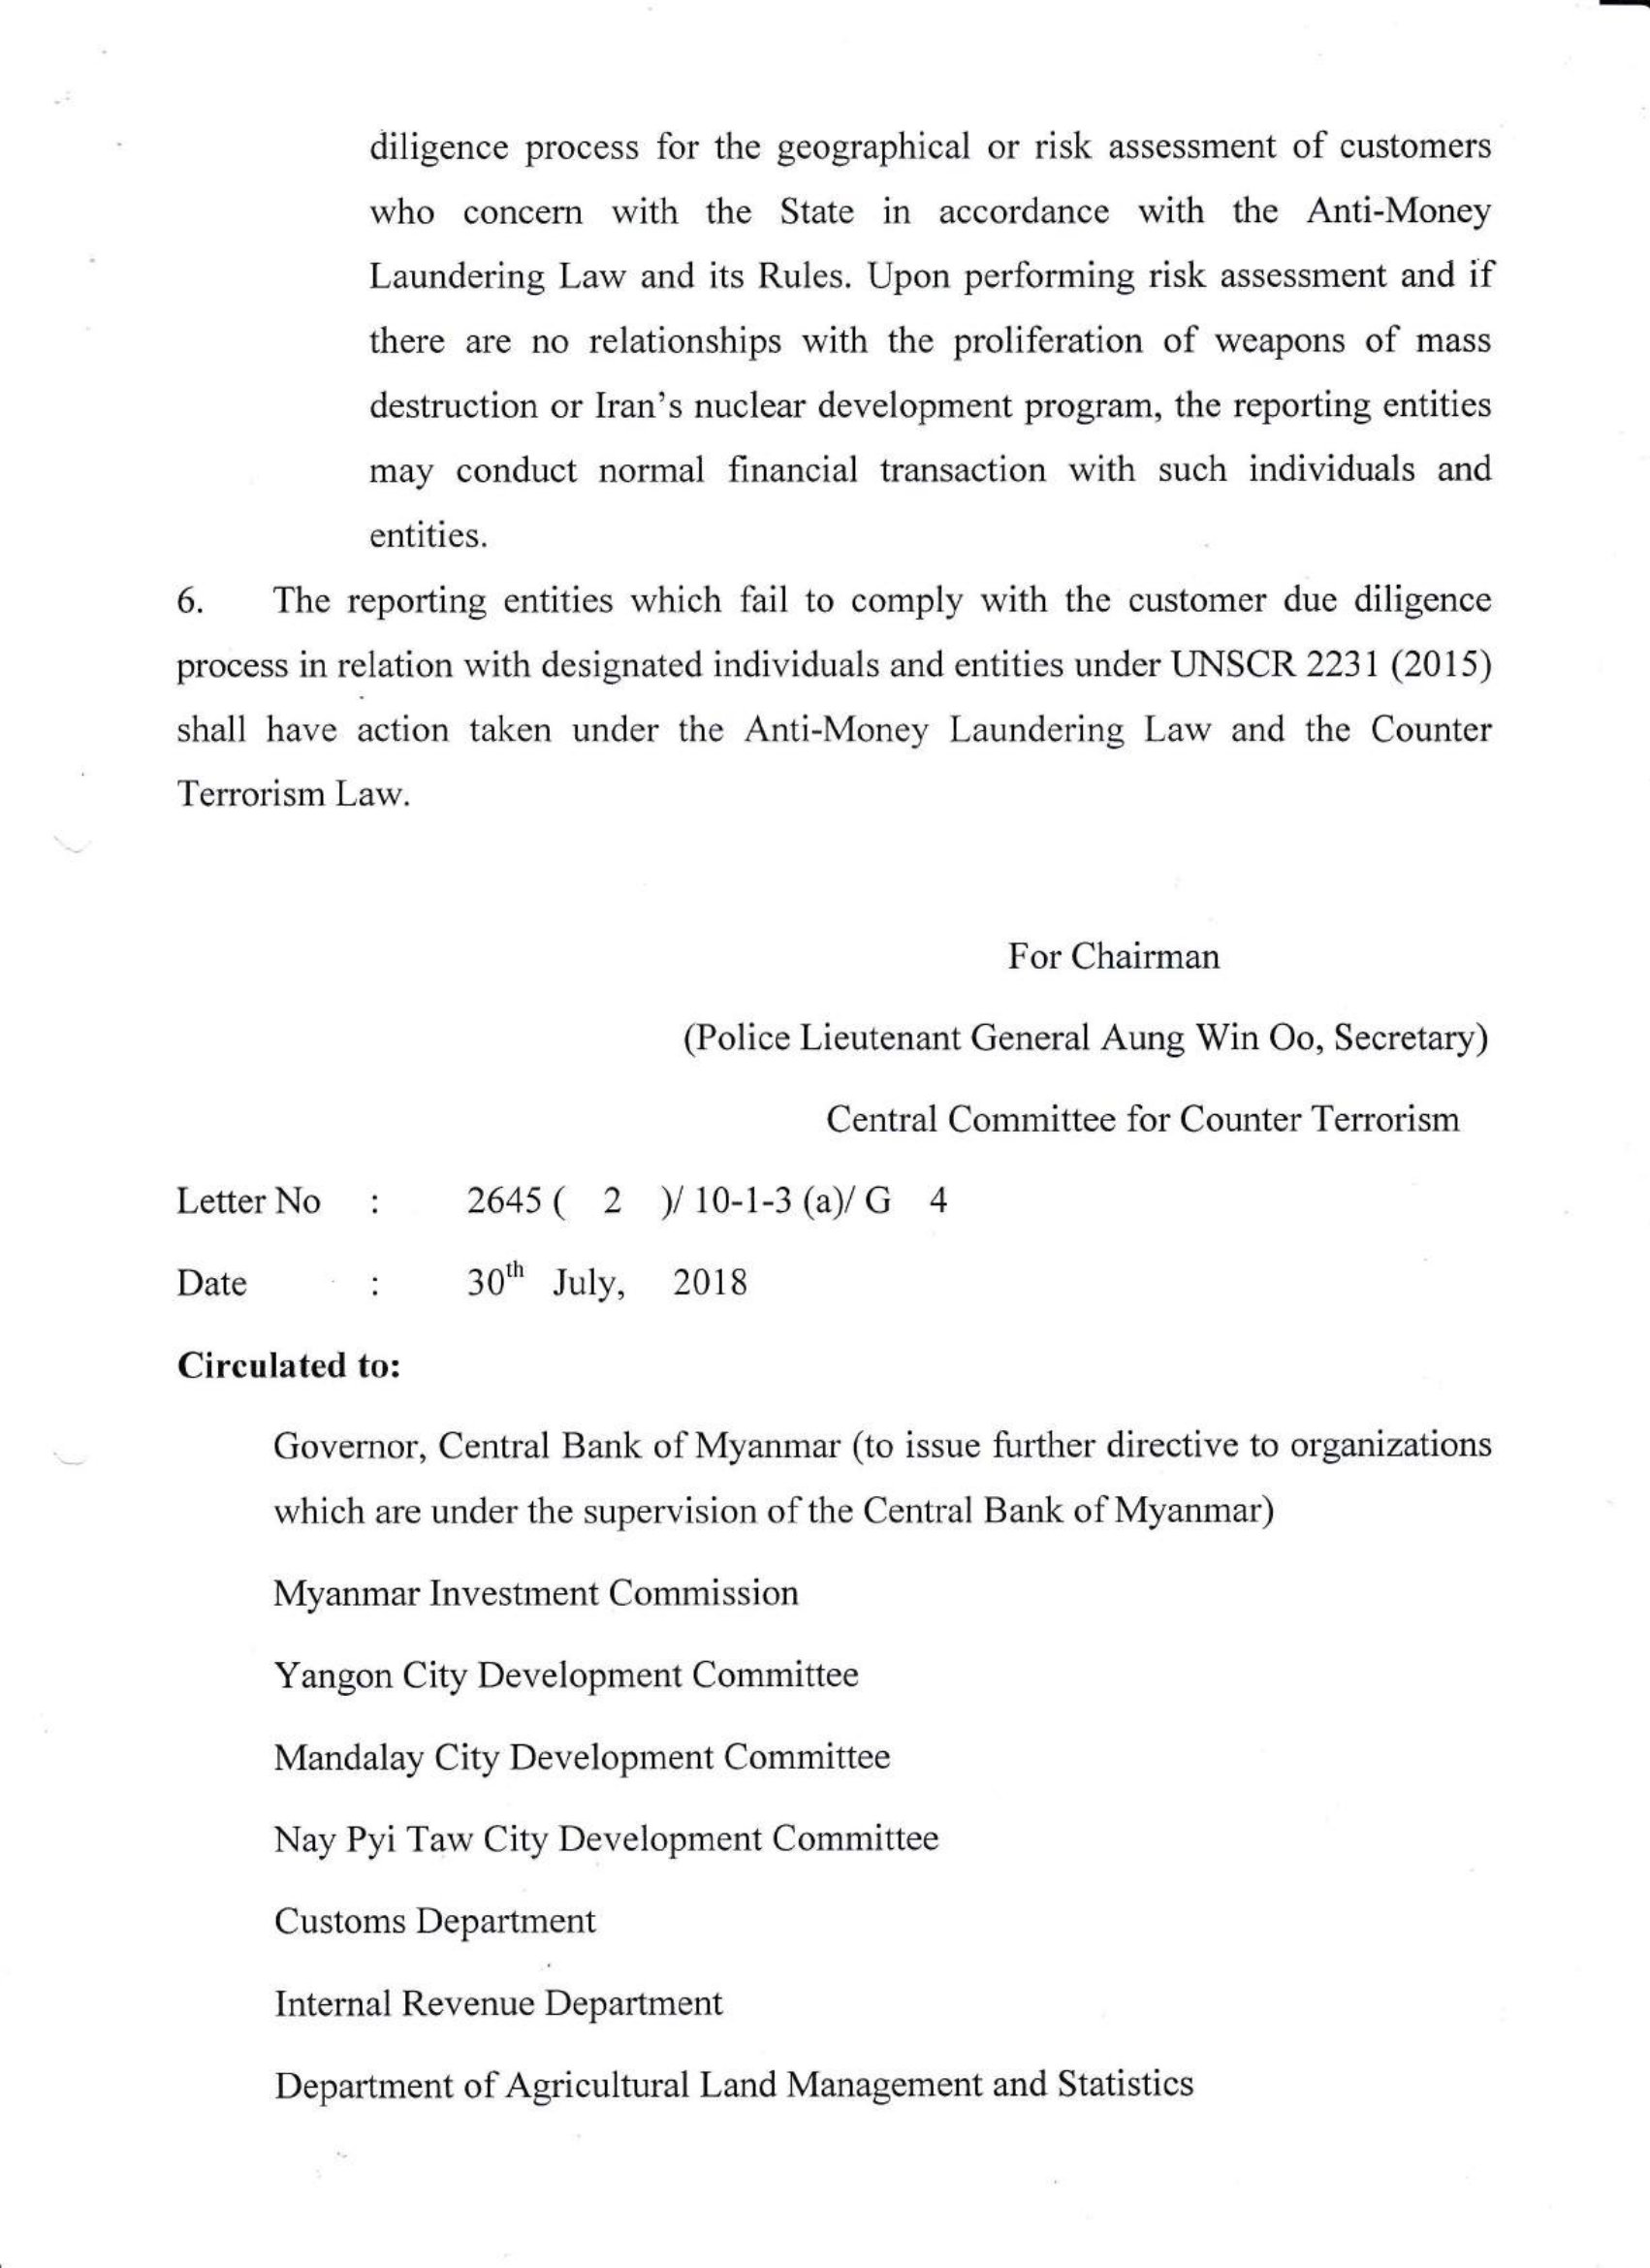 CCCT proliferation order (2 2018)